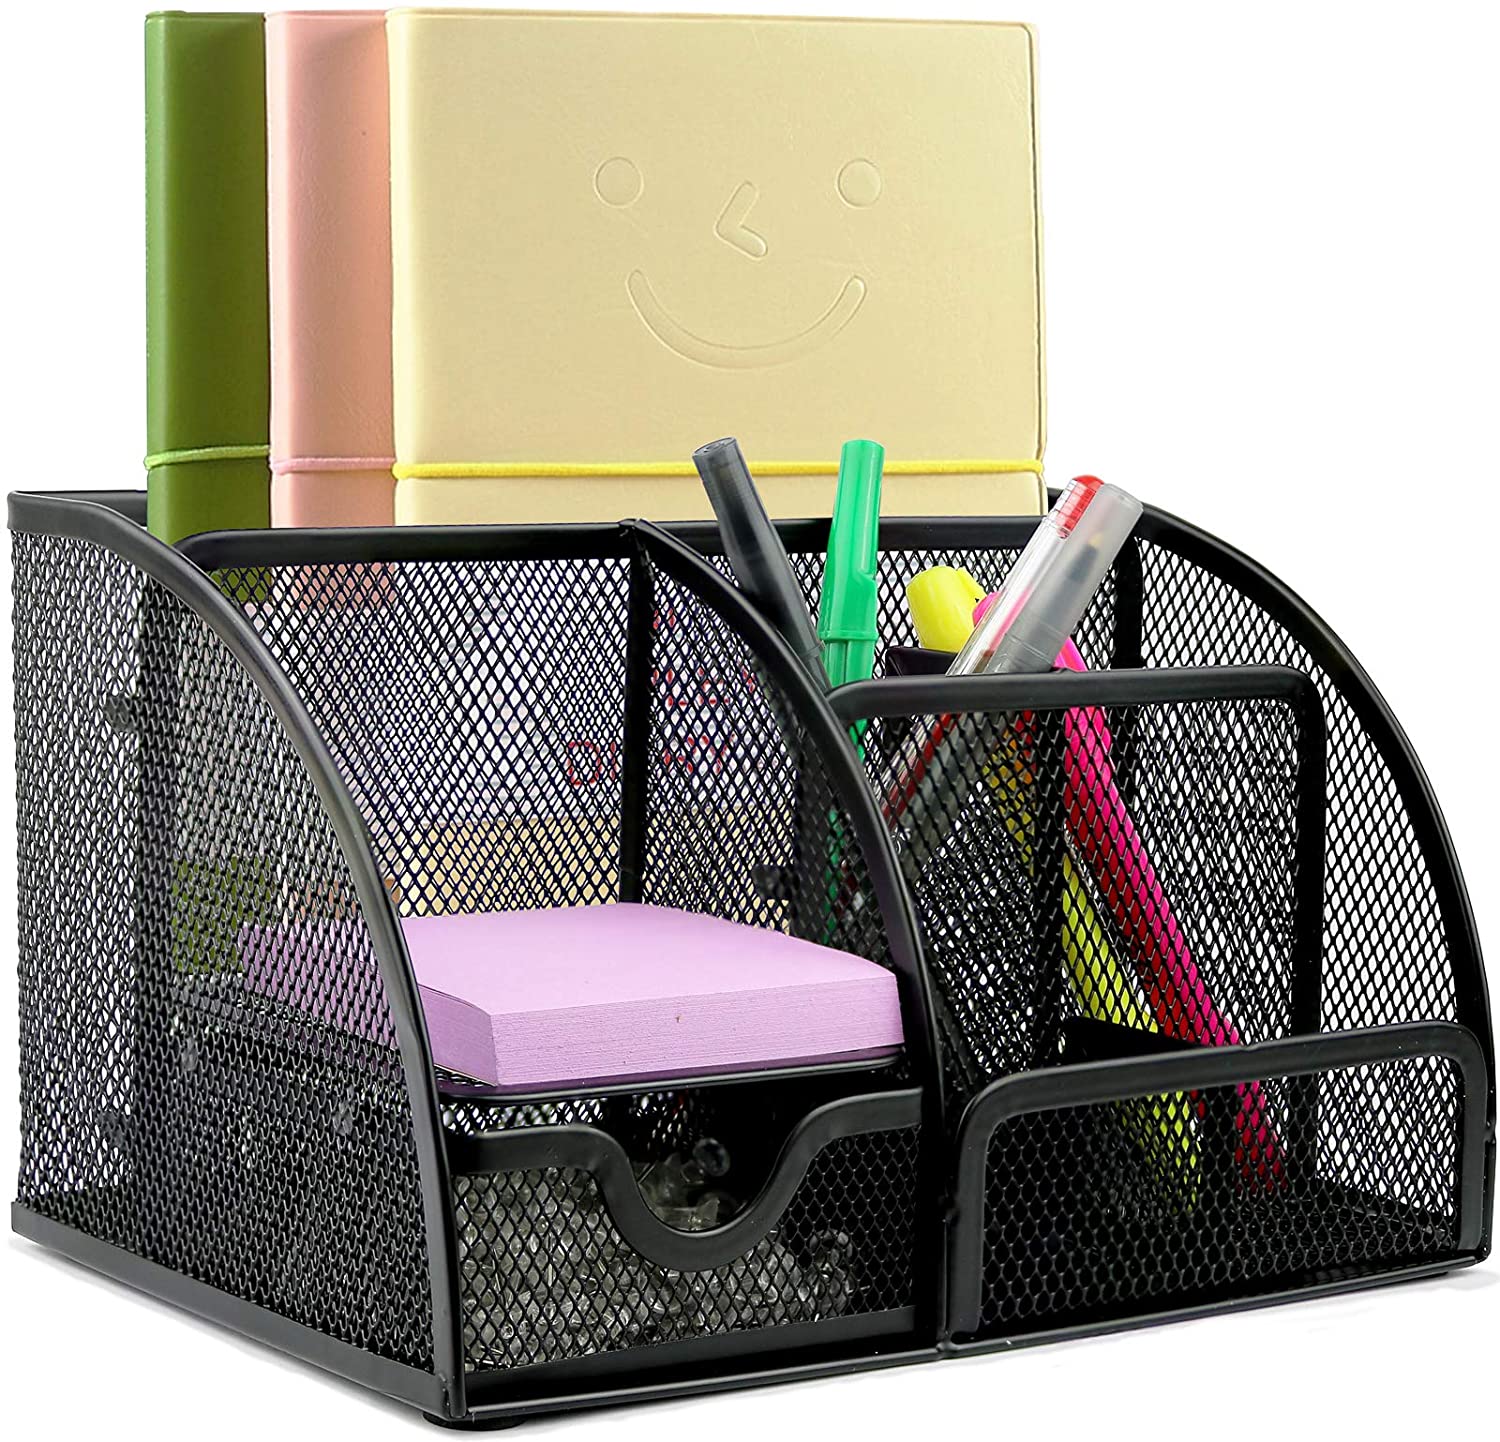 Greenco Mesh Desk Organizer Office Supplies Caddy, 6 Compartments - Black - image 1 of 7